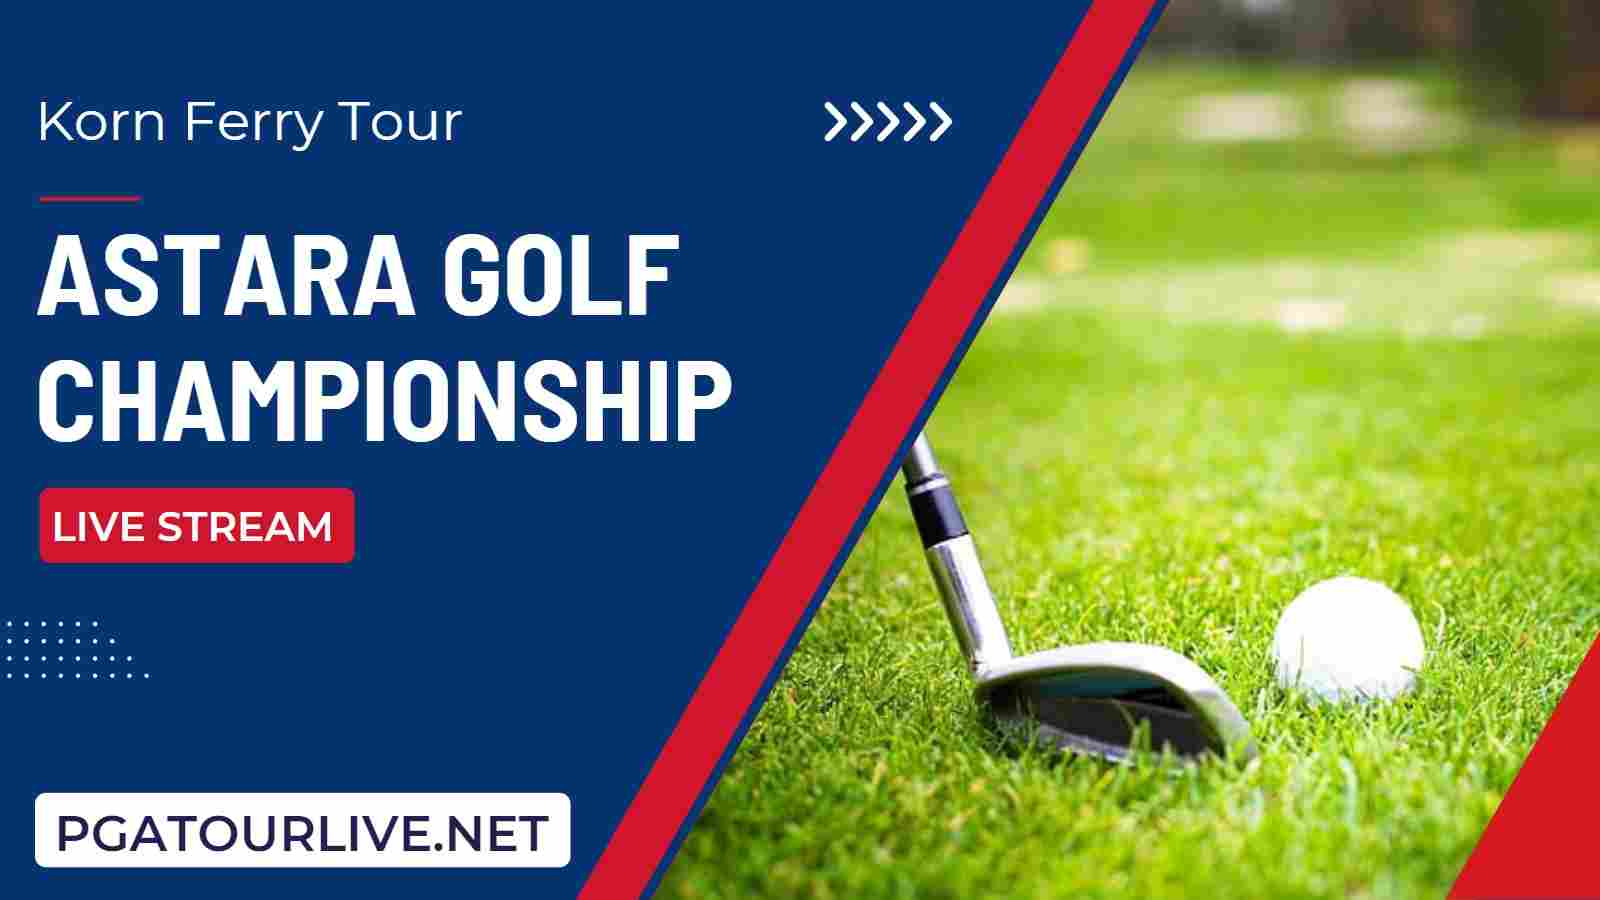 Astara Golf Championship Live Stream Korn Ferry